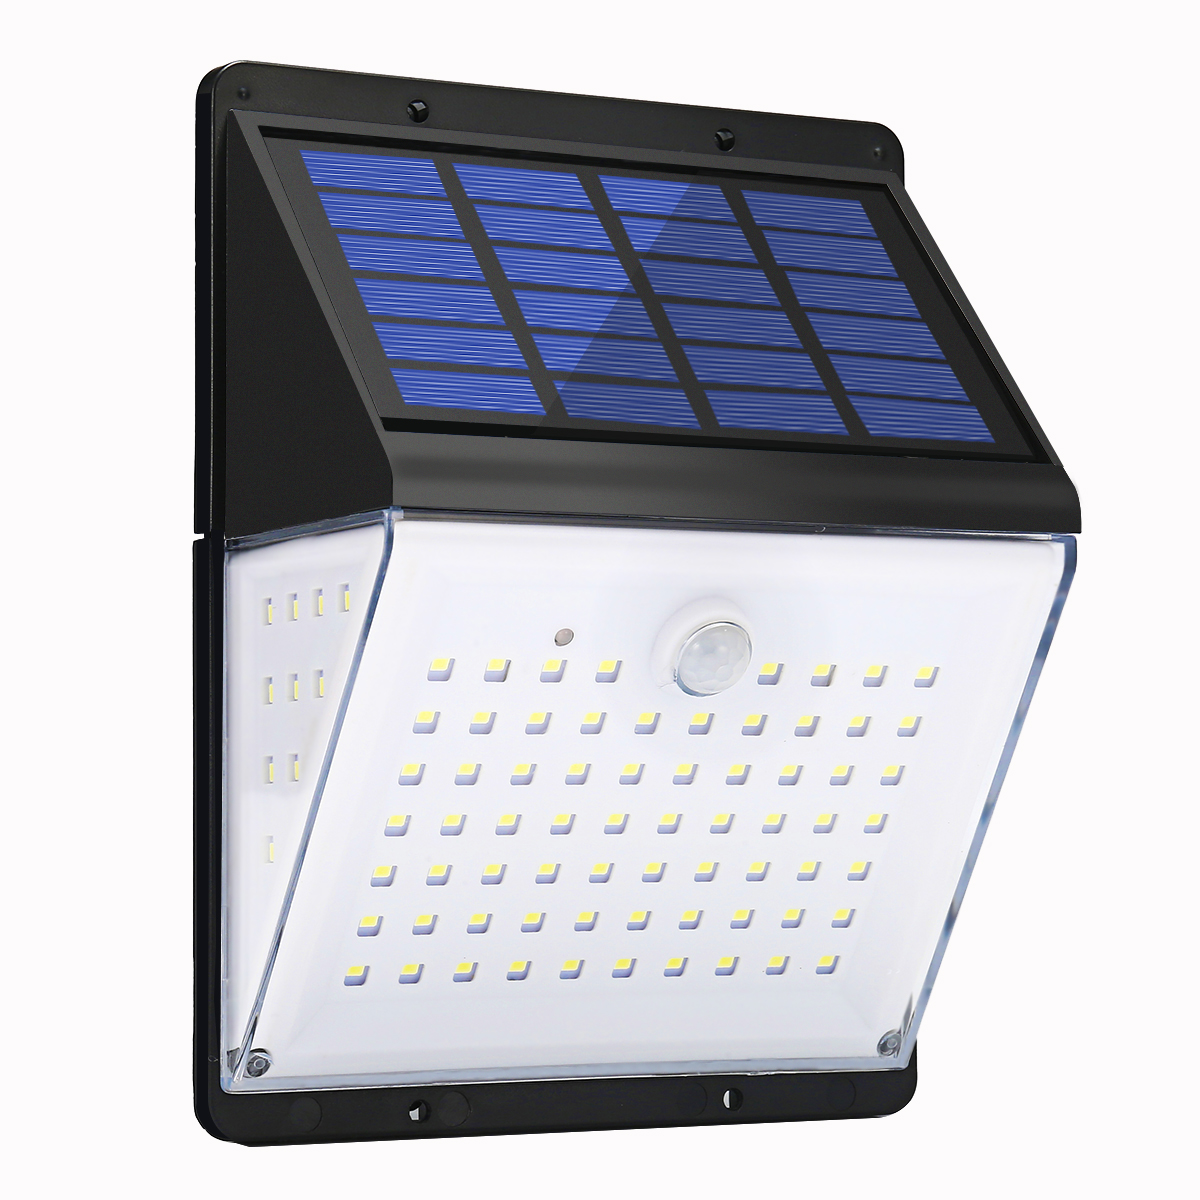 

AUGIENB 88LED 600lumen Garden LEDs Split Solar Powered Light Motion Sensor Waterproof Wall Lamp Remote/Voice Control(50dB)